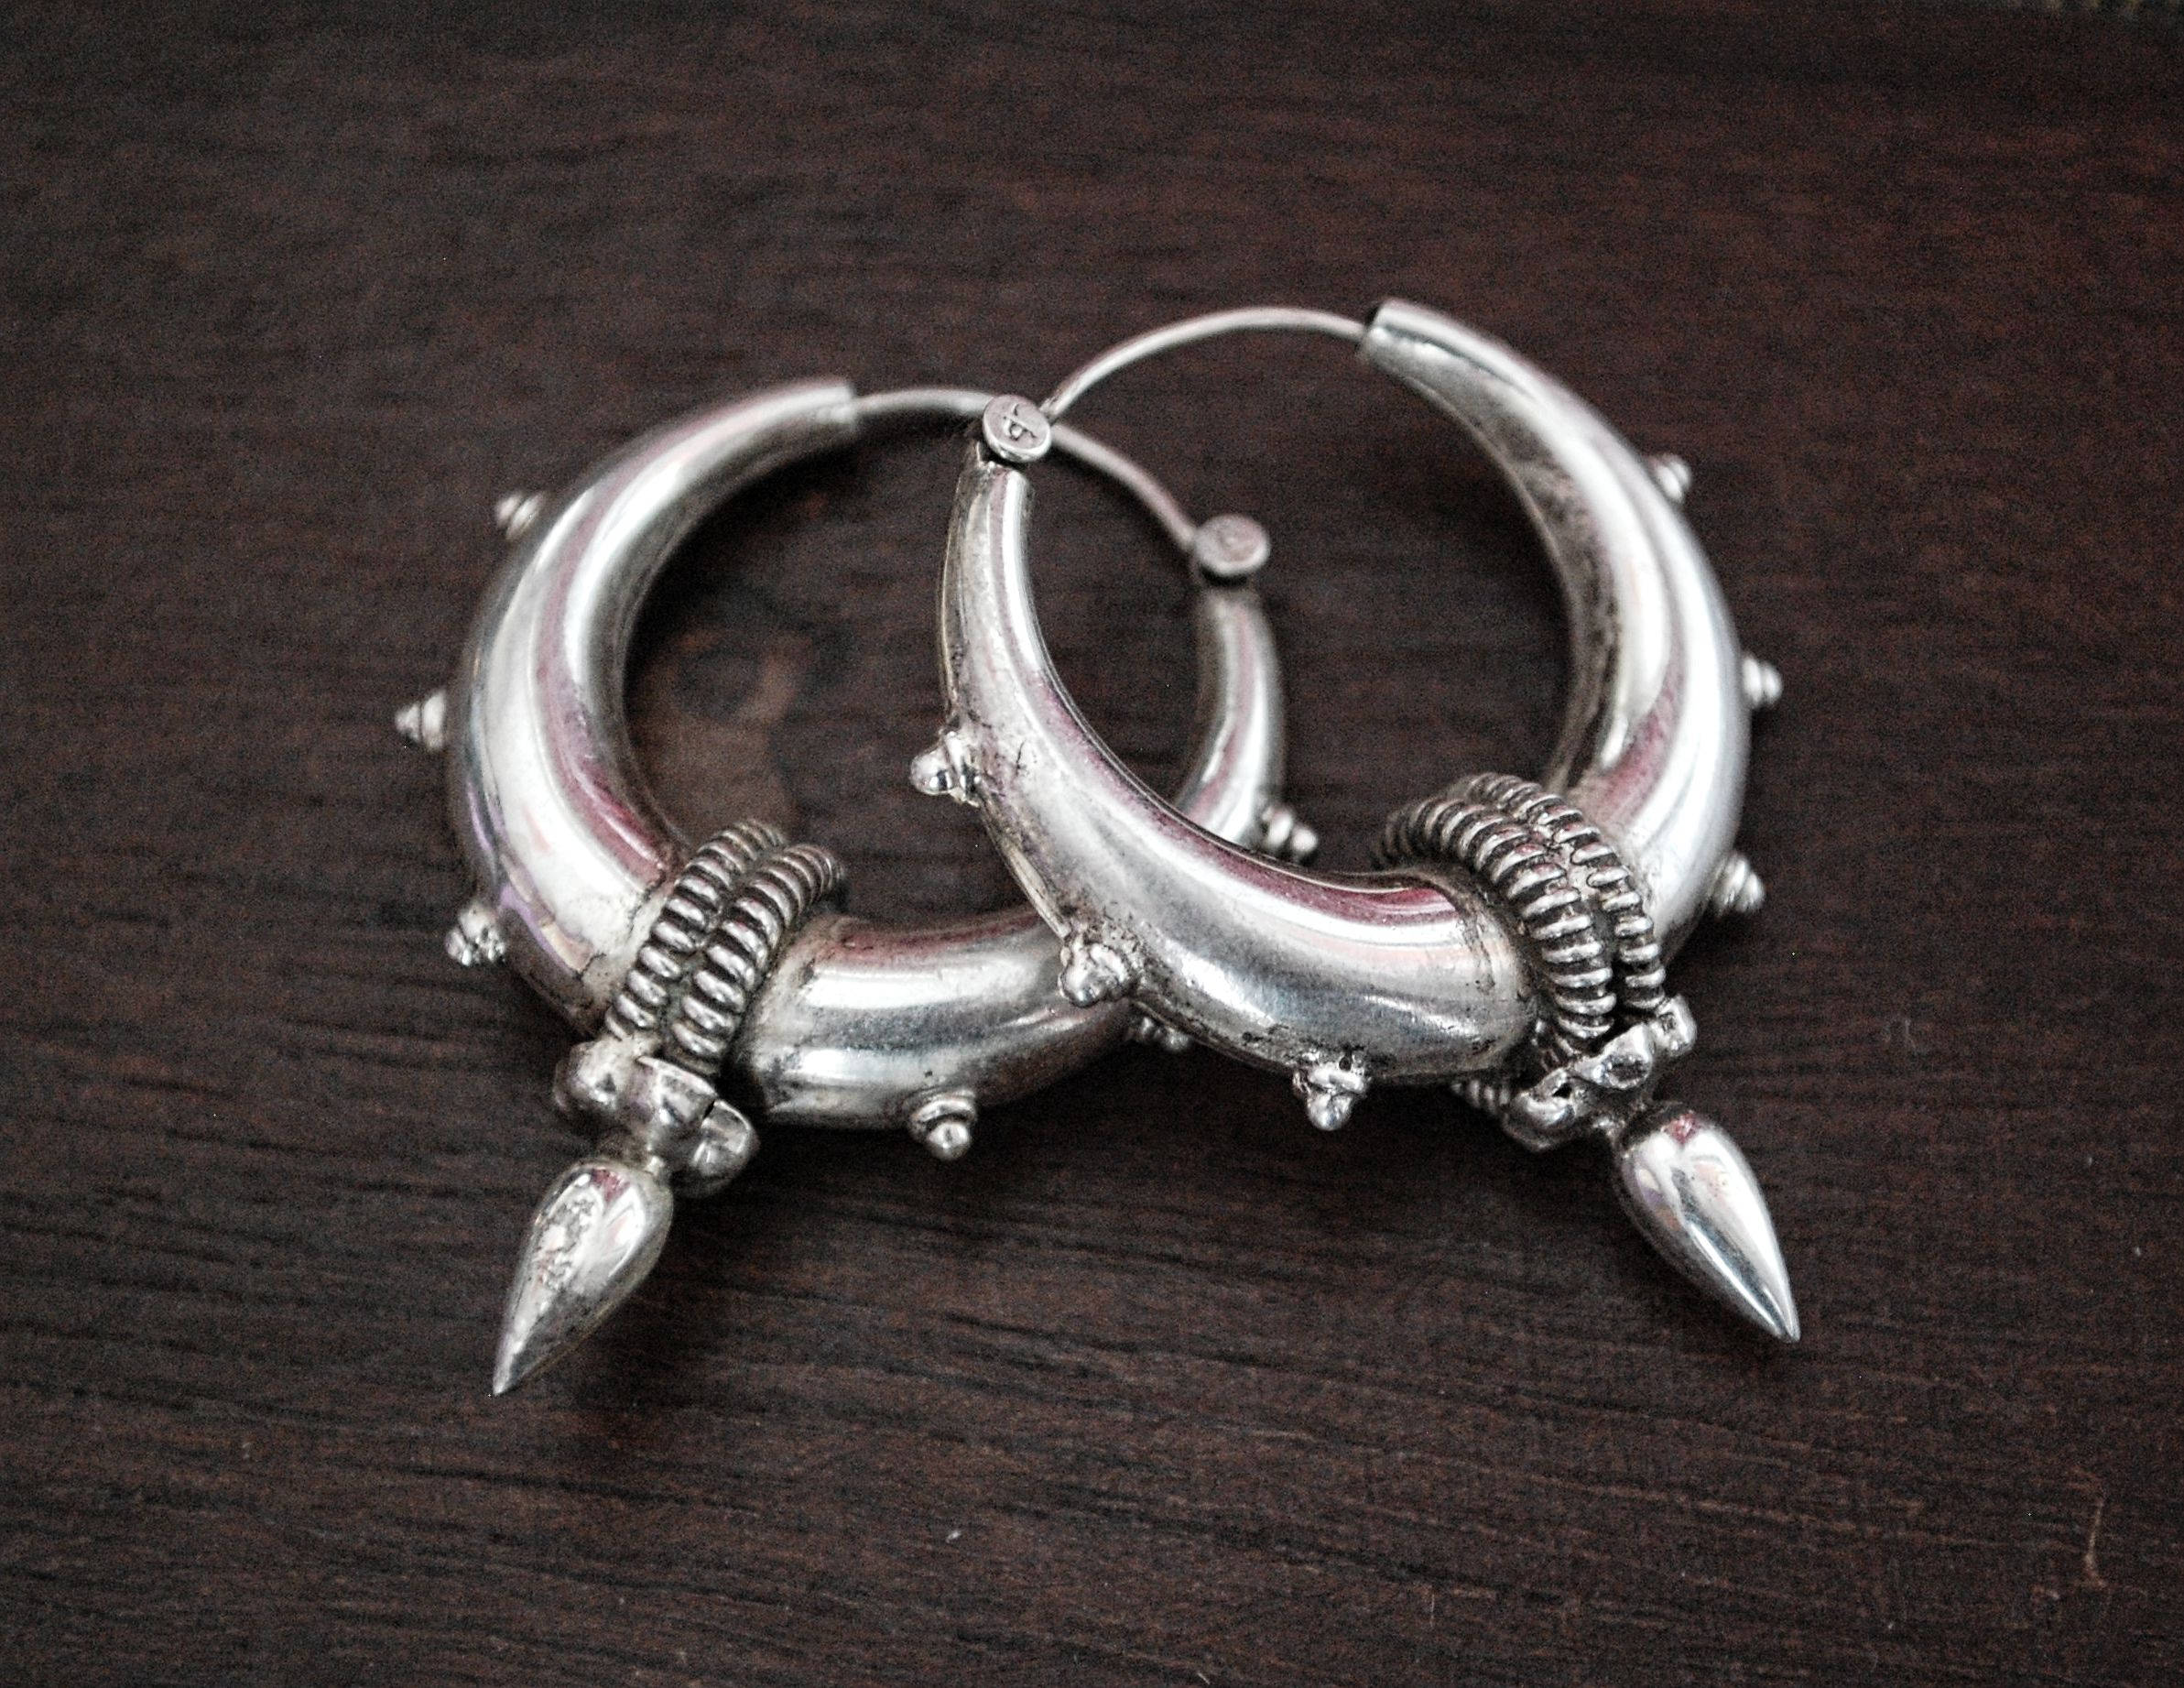 Rajasthani Earrings - Medium - Indian Jewelry - Rajasthan Jewelry - Rajasthan Earrings - Gypsy Jewelry - Gypsy Earrings